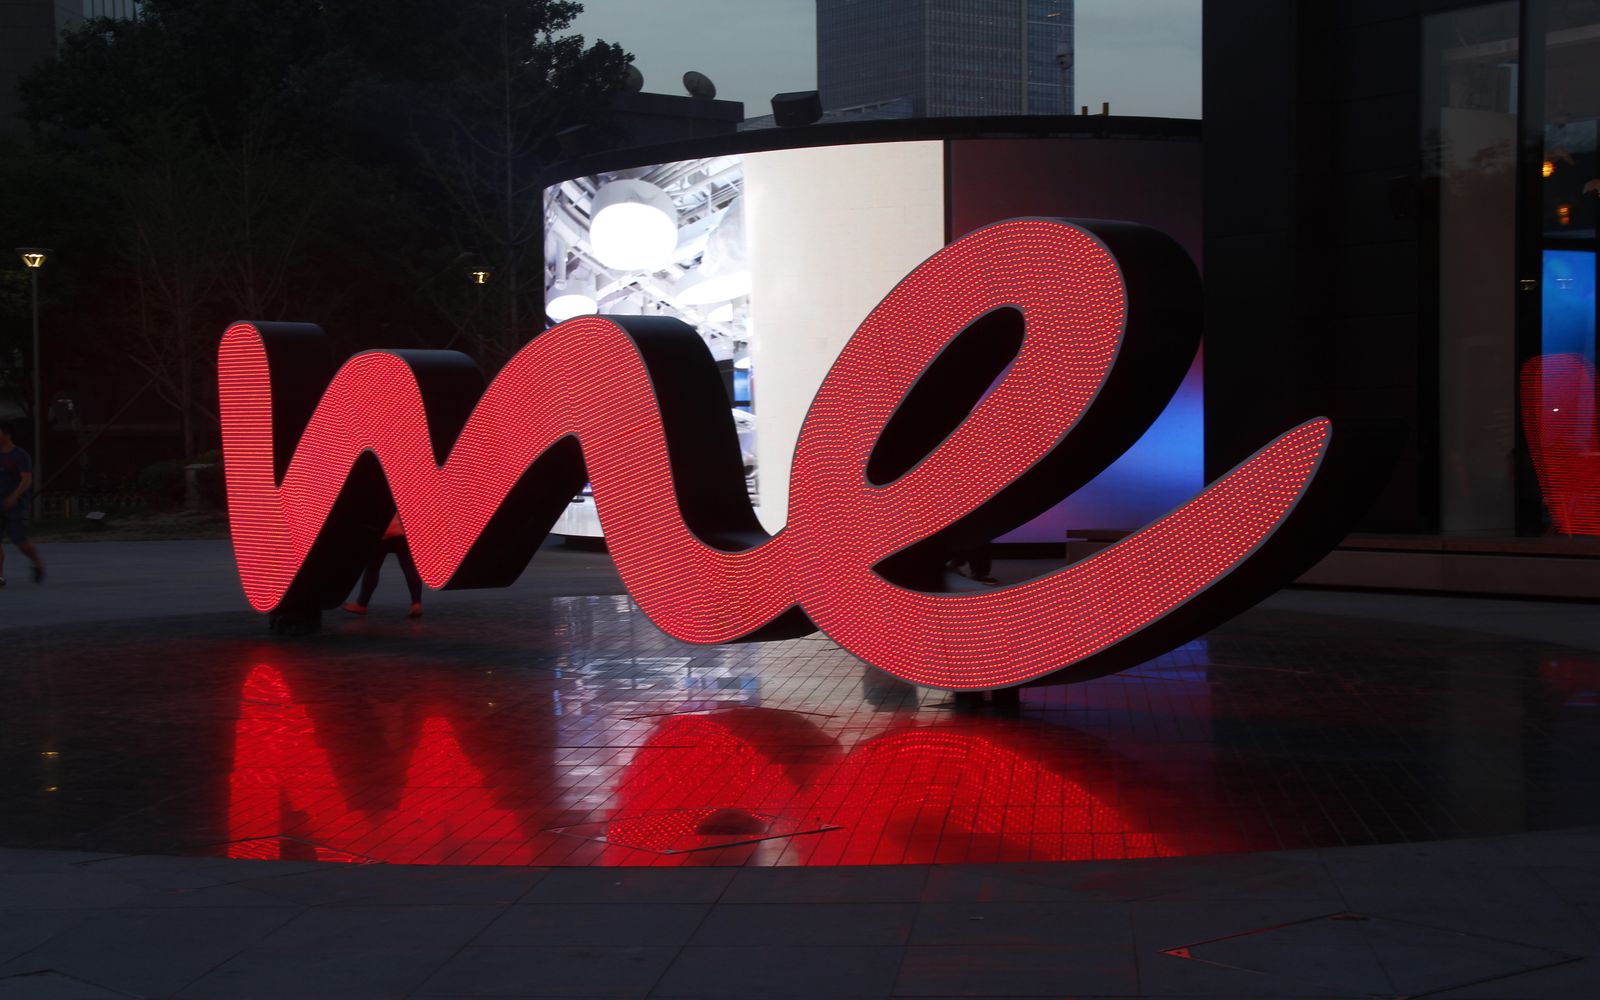 Benz ME interactive sculpture, China